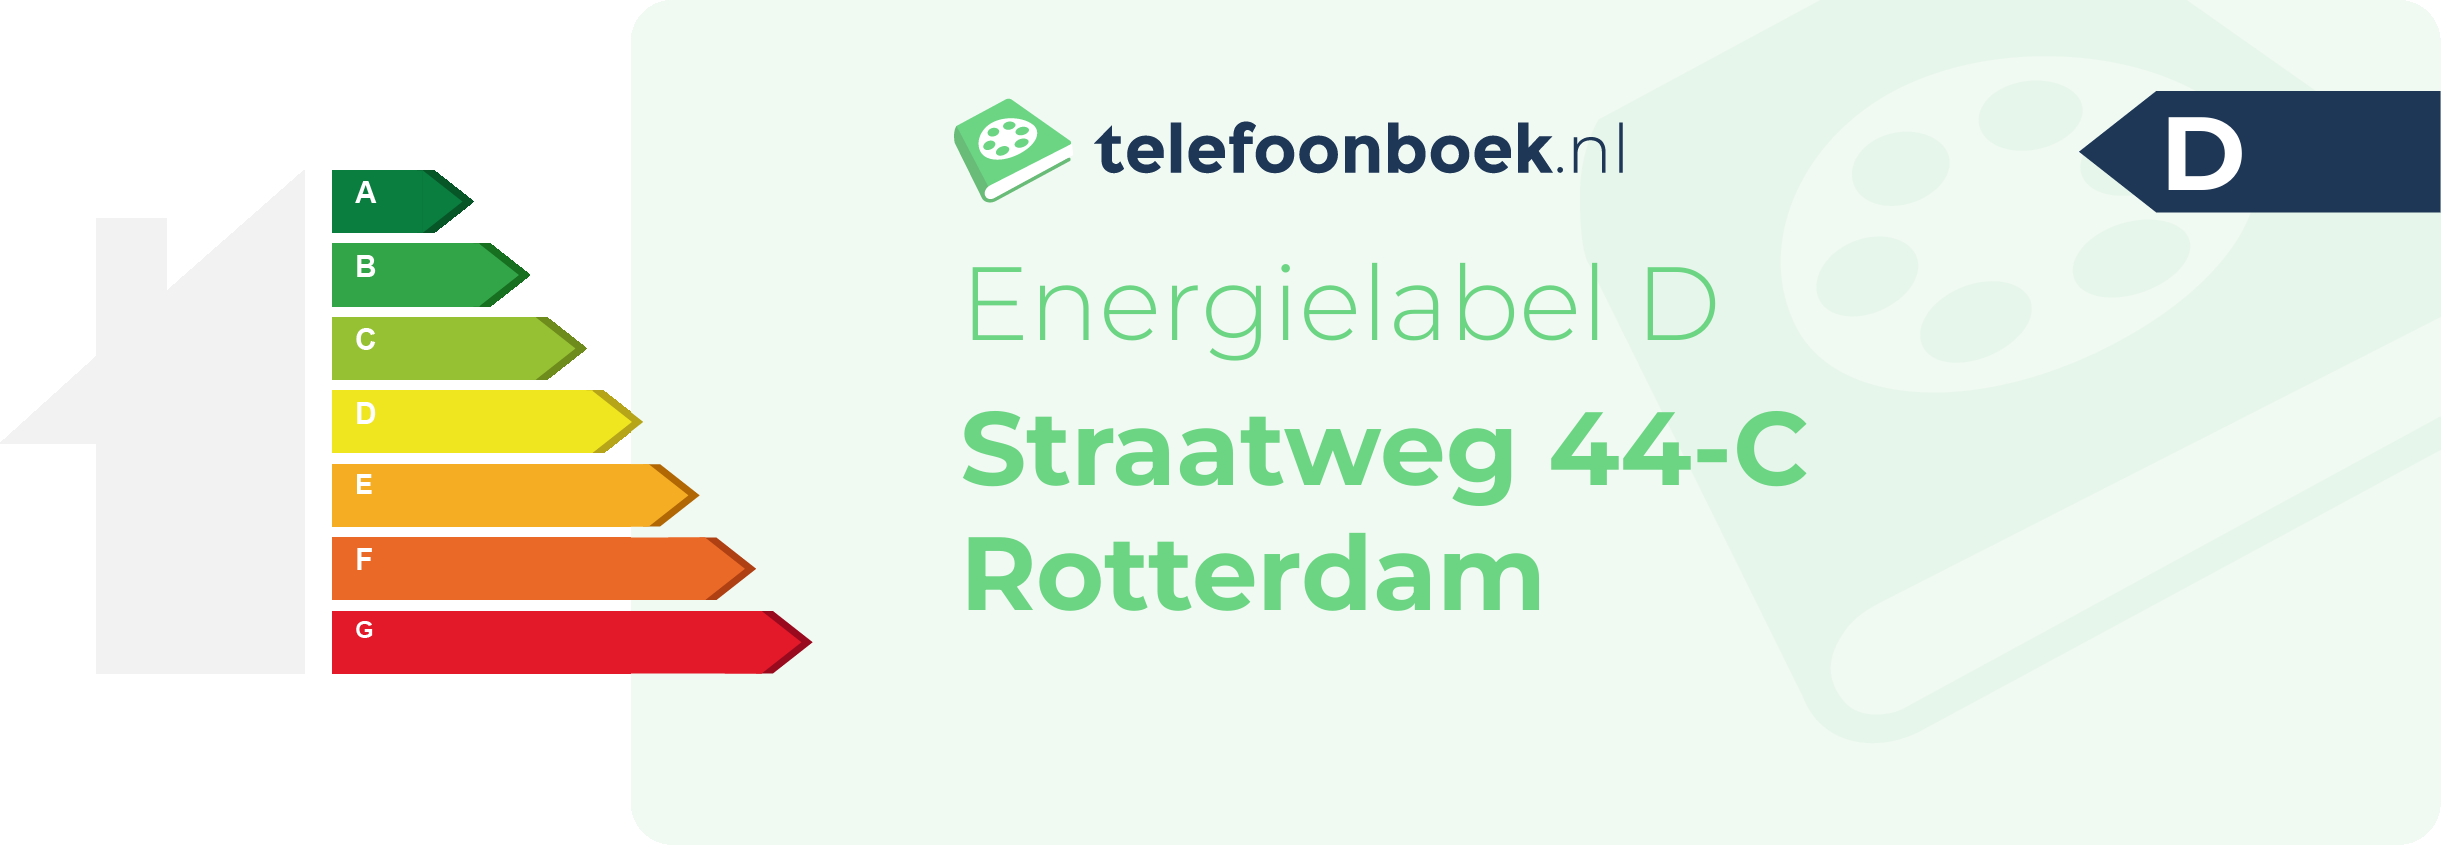 Energielabel Straatweg 44-C Rotterdam